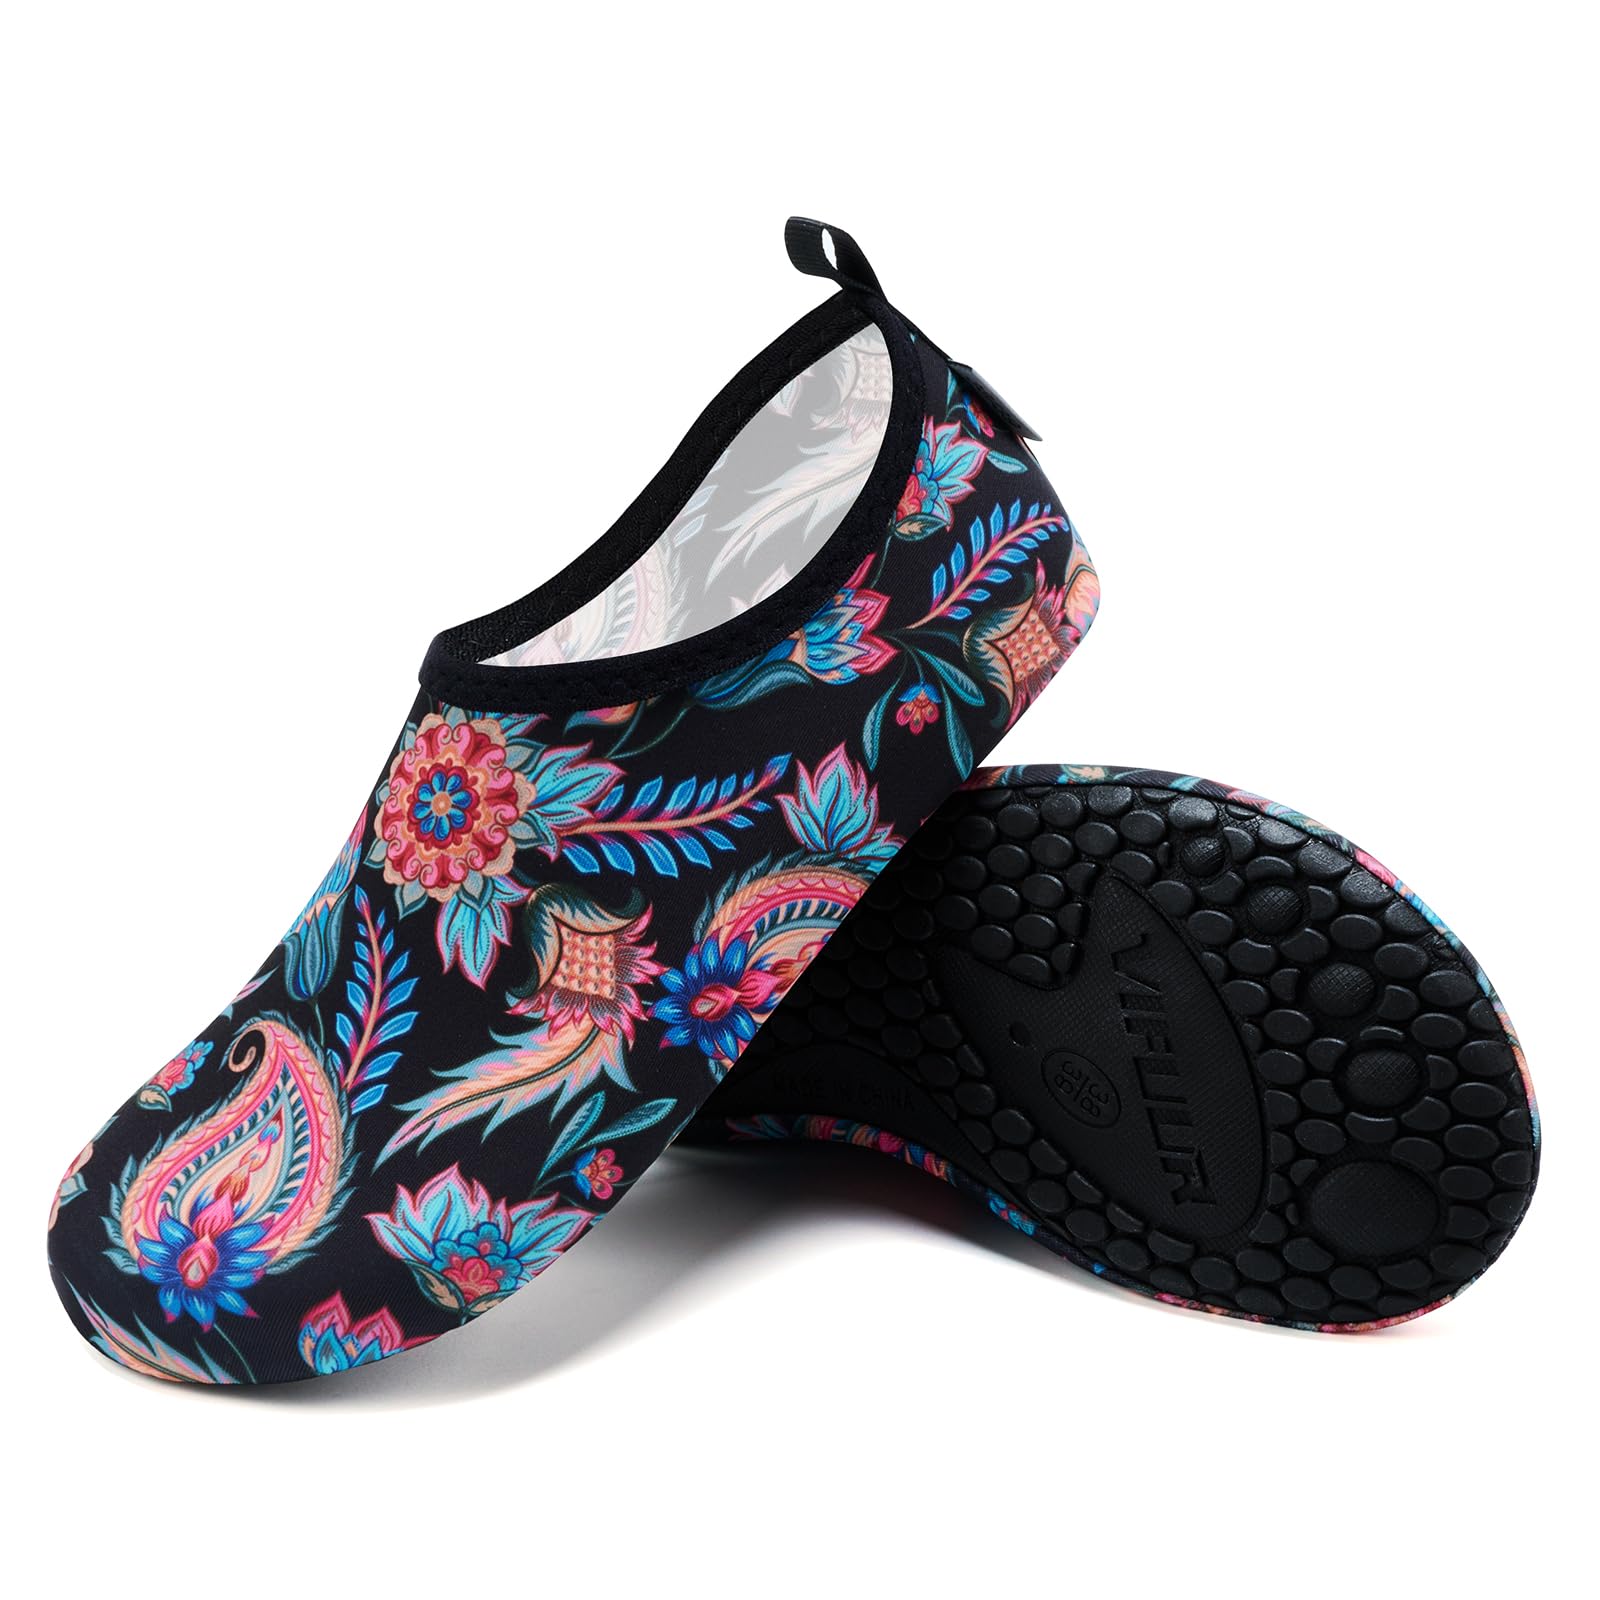 VIFUUR Water Sports Shoes Barefoot Quick-Dry Aqua Yoga Socks Slip